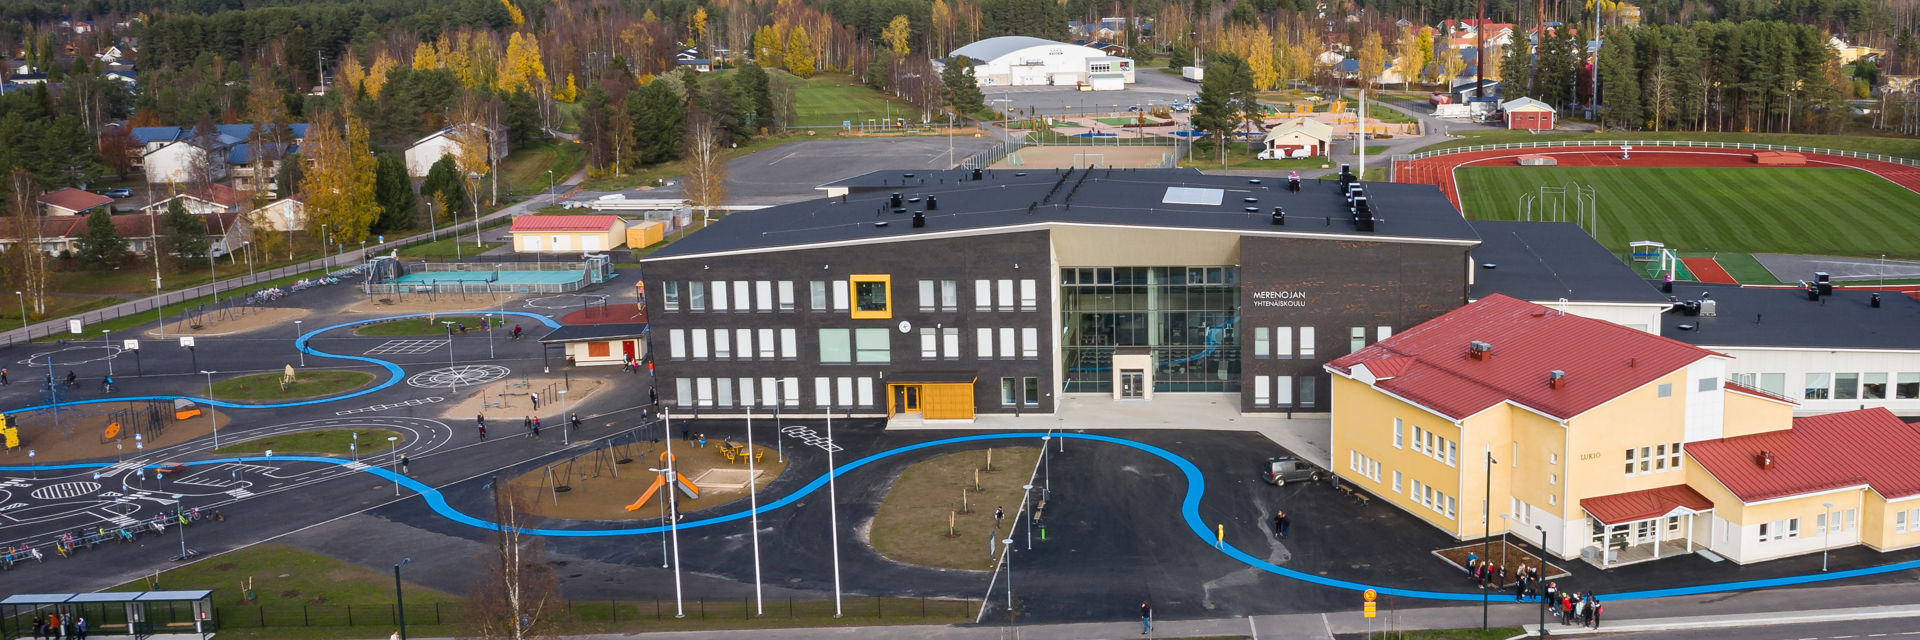 Merenoja comprehensive school in Kalajoki